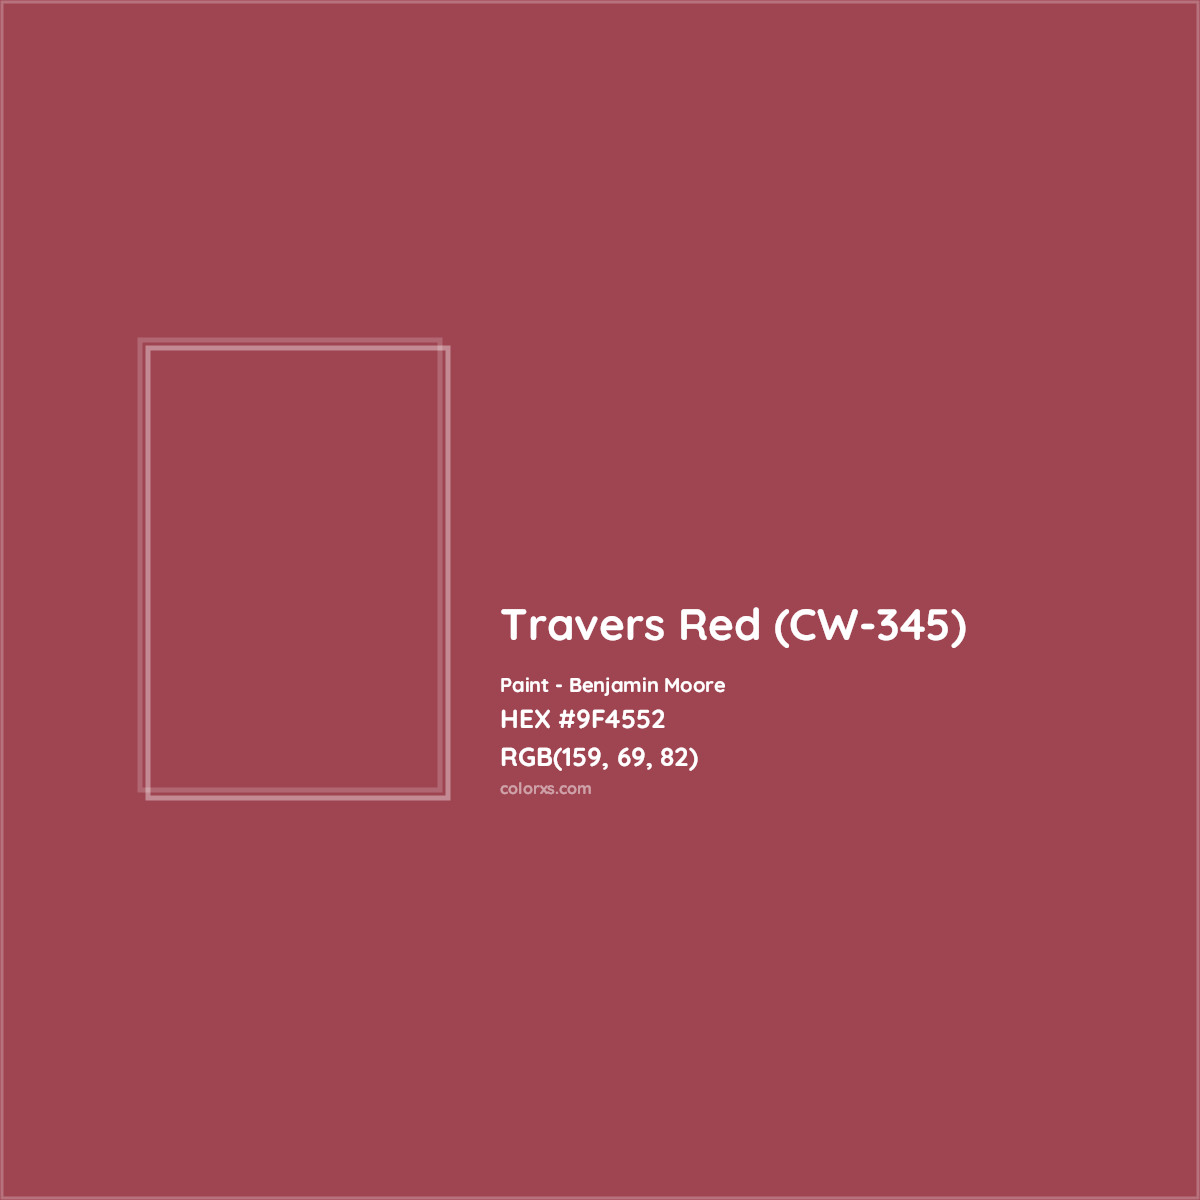 HEX #9F4552 Travers Red (CW-345) Paint Benjamin Moore - Color Code